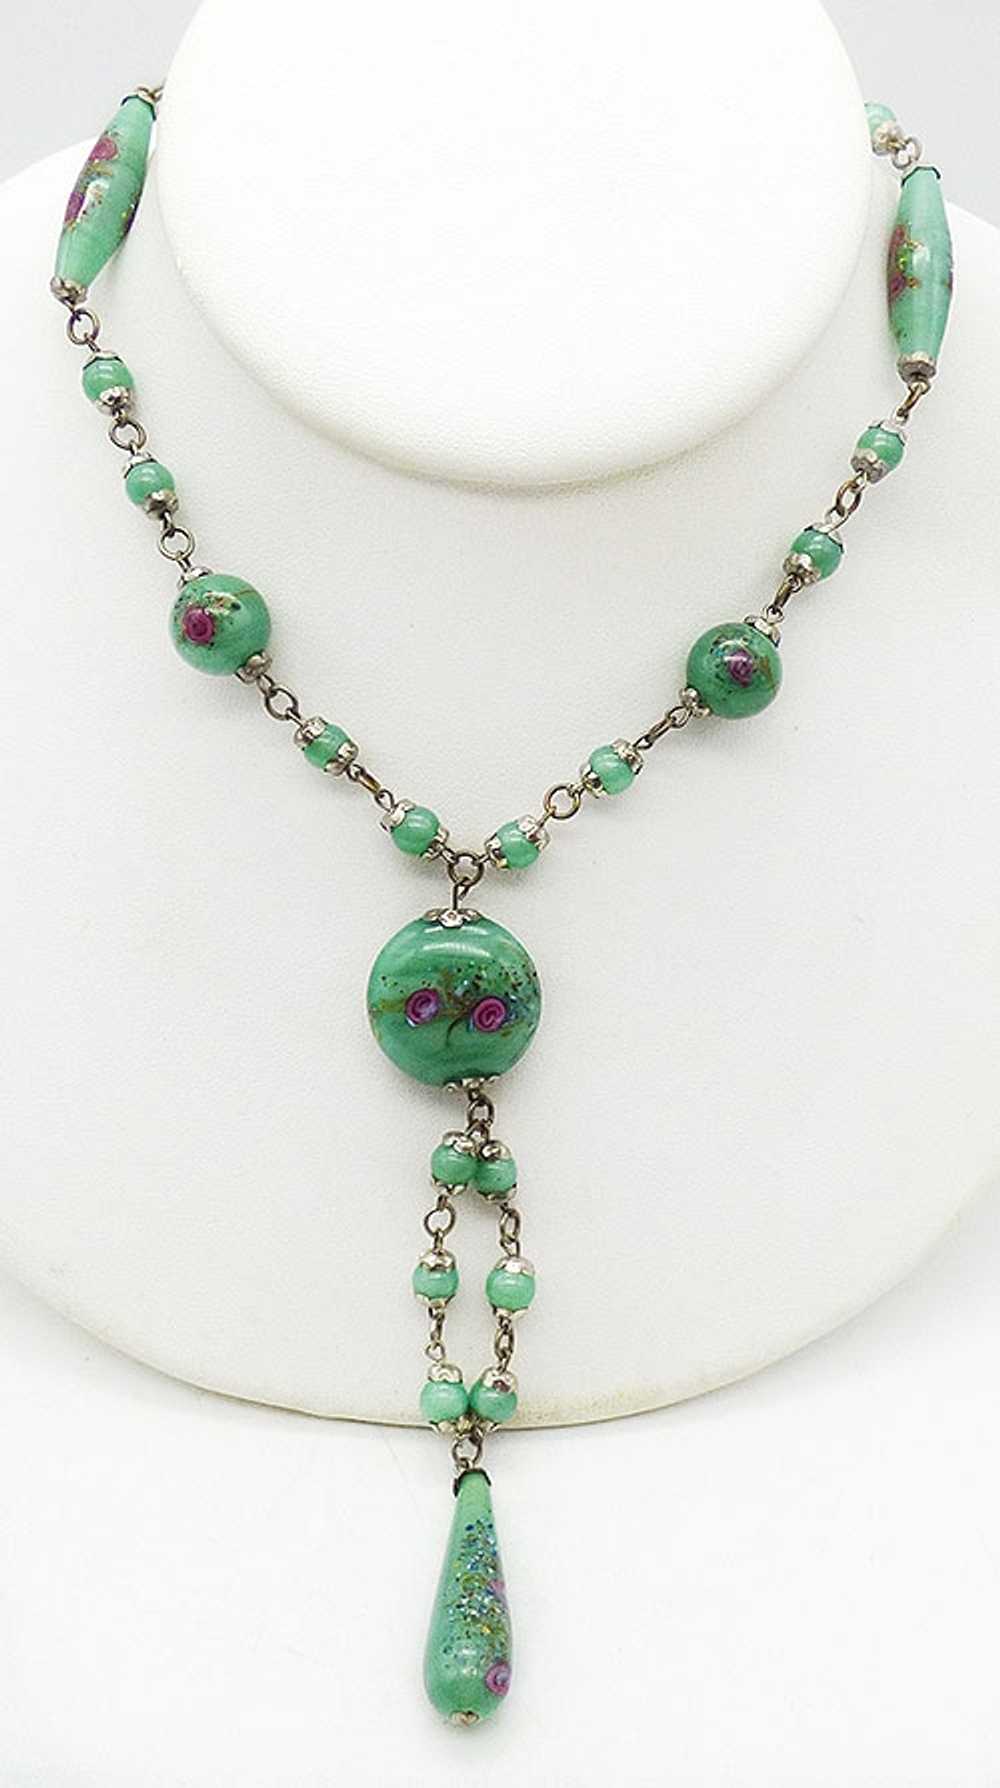 Green Venetian Glass Bead Sautoir Necklace - image 1